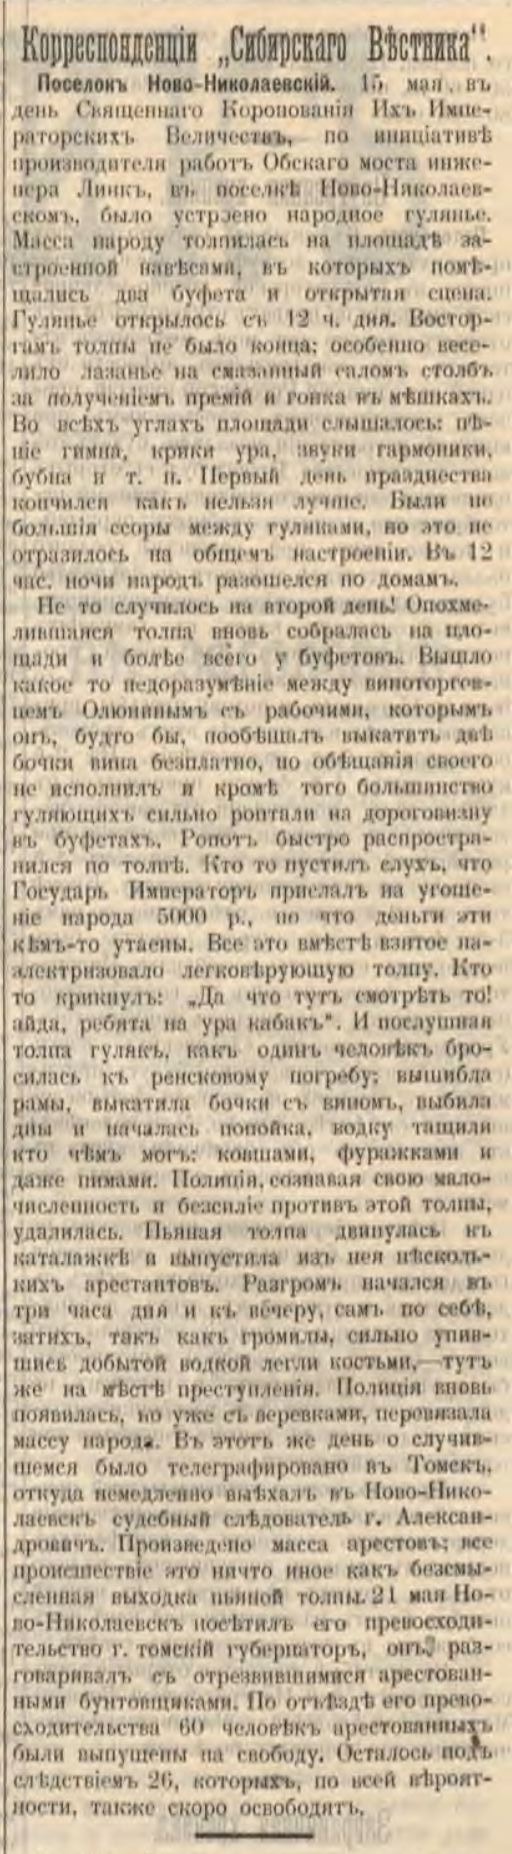 Сибирский вестник - 4 июня 1896 - №118